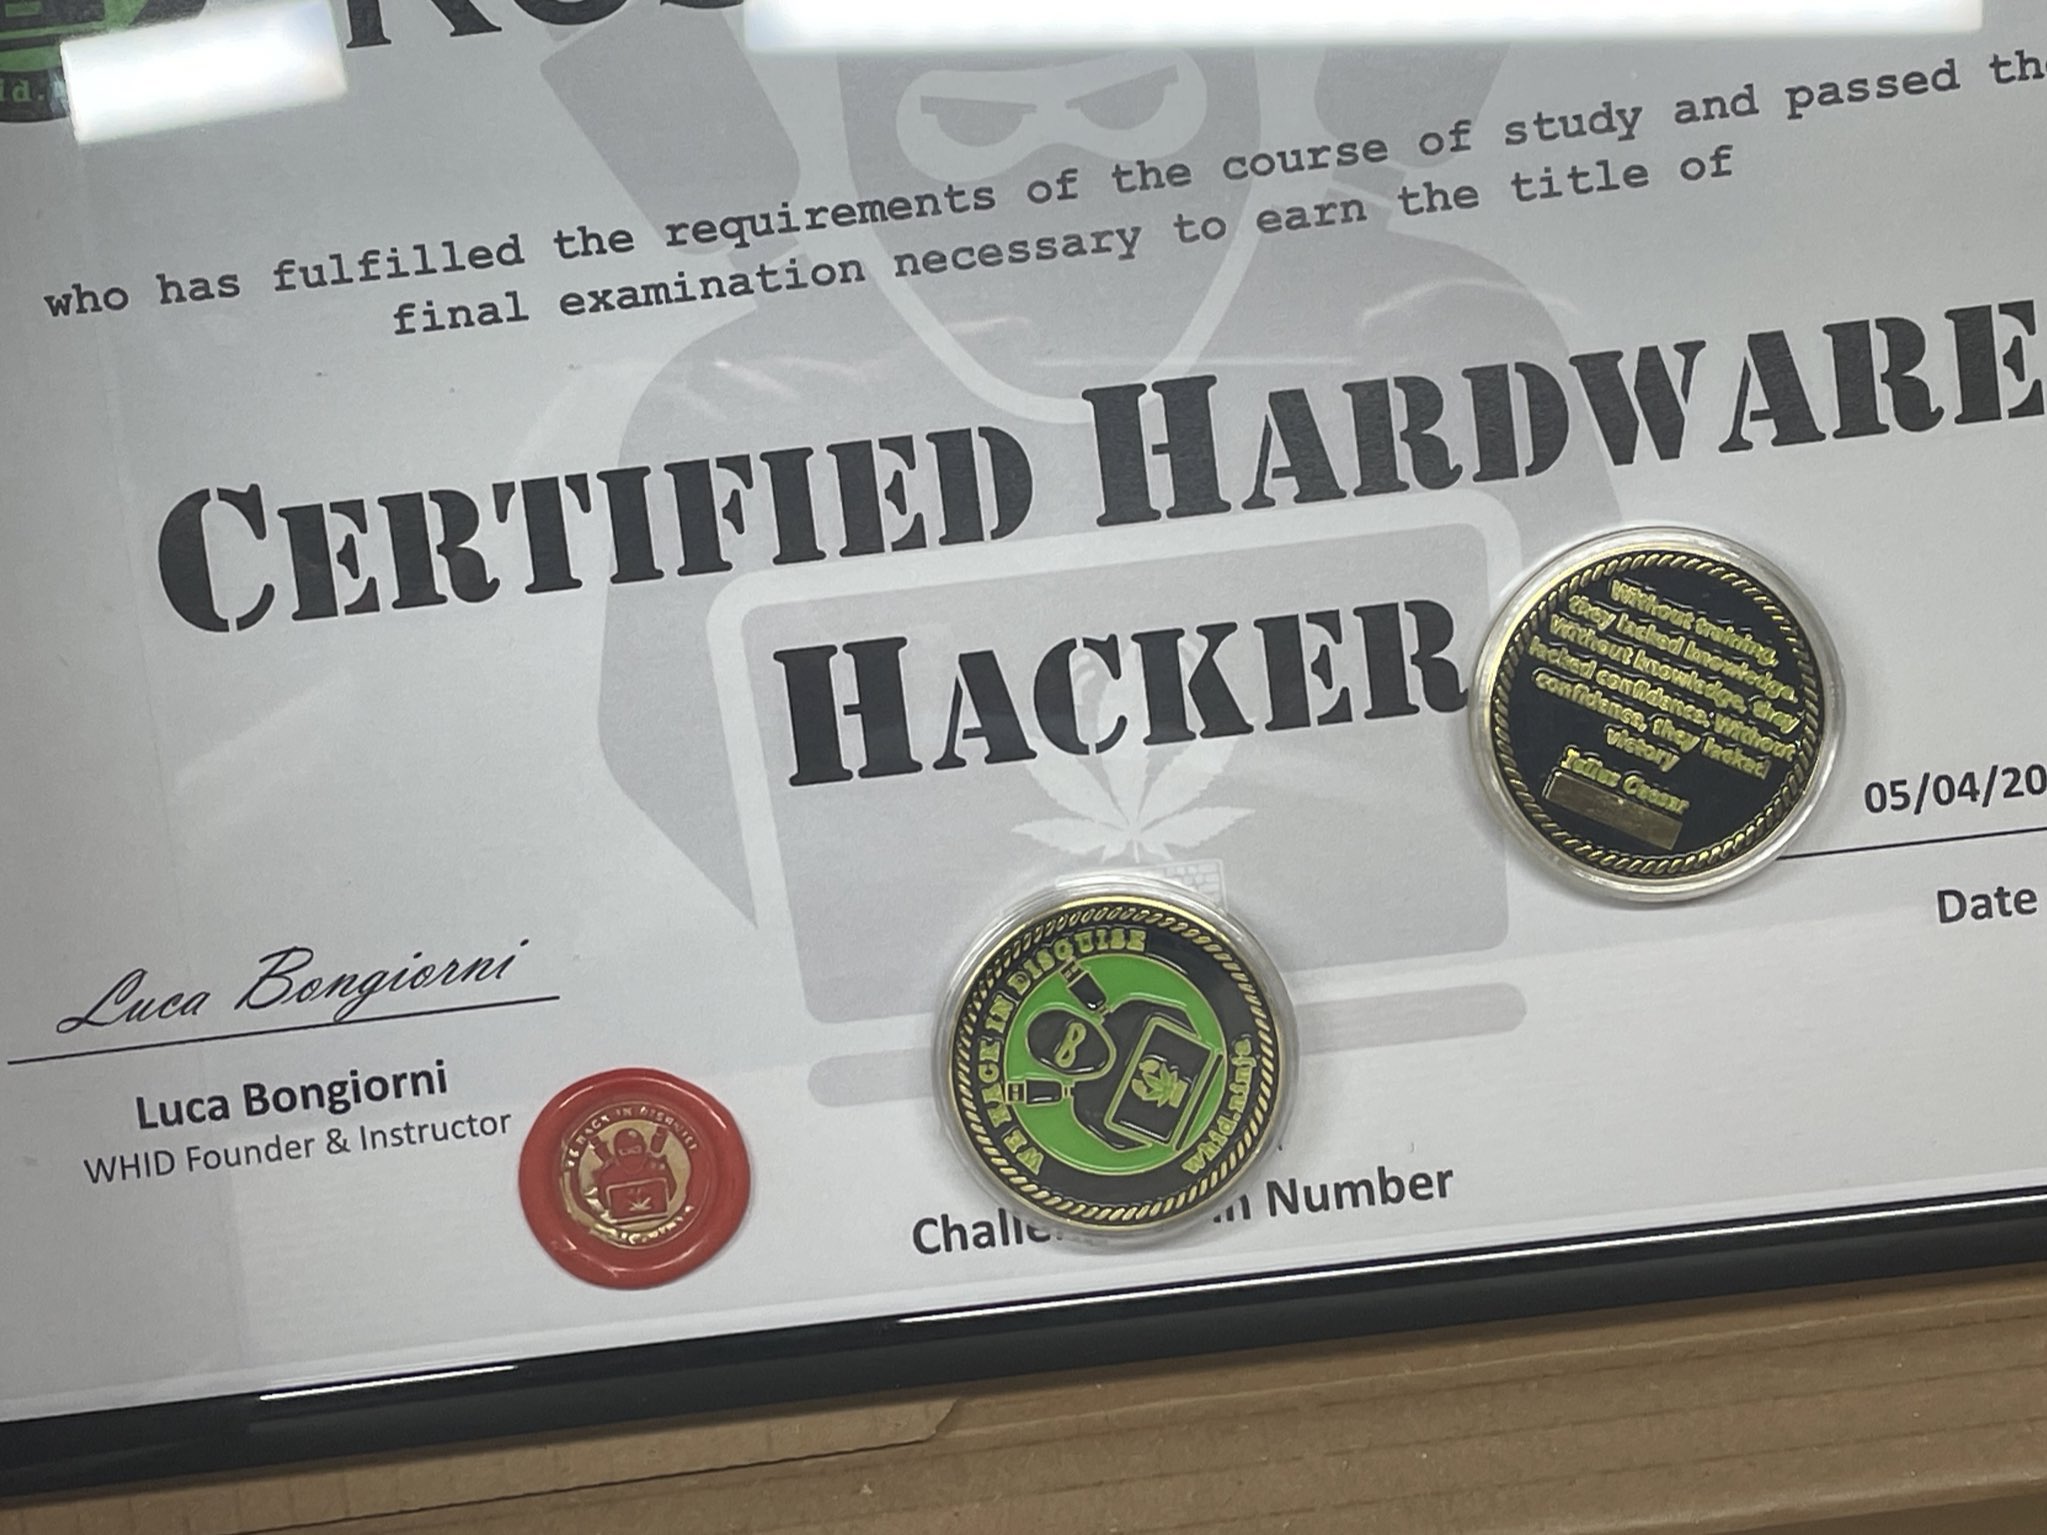 [STANDALONE] Exam Voucher - Certified Hardware Hacker - CH2